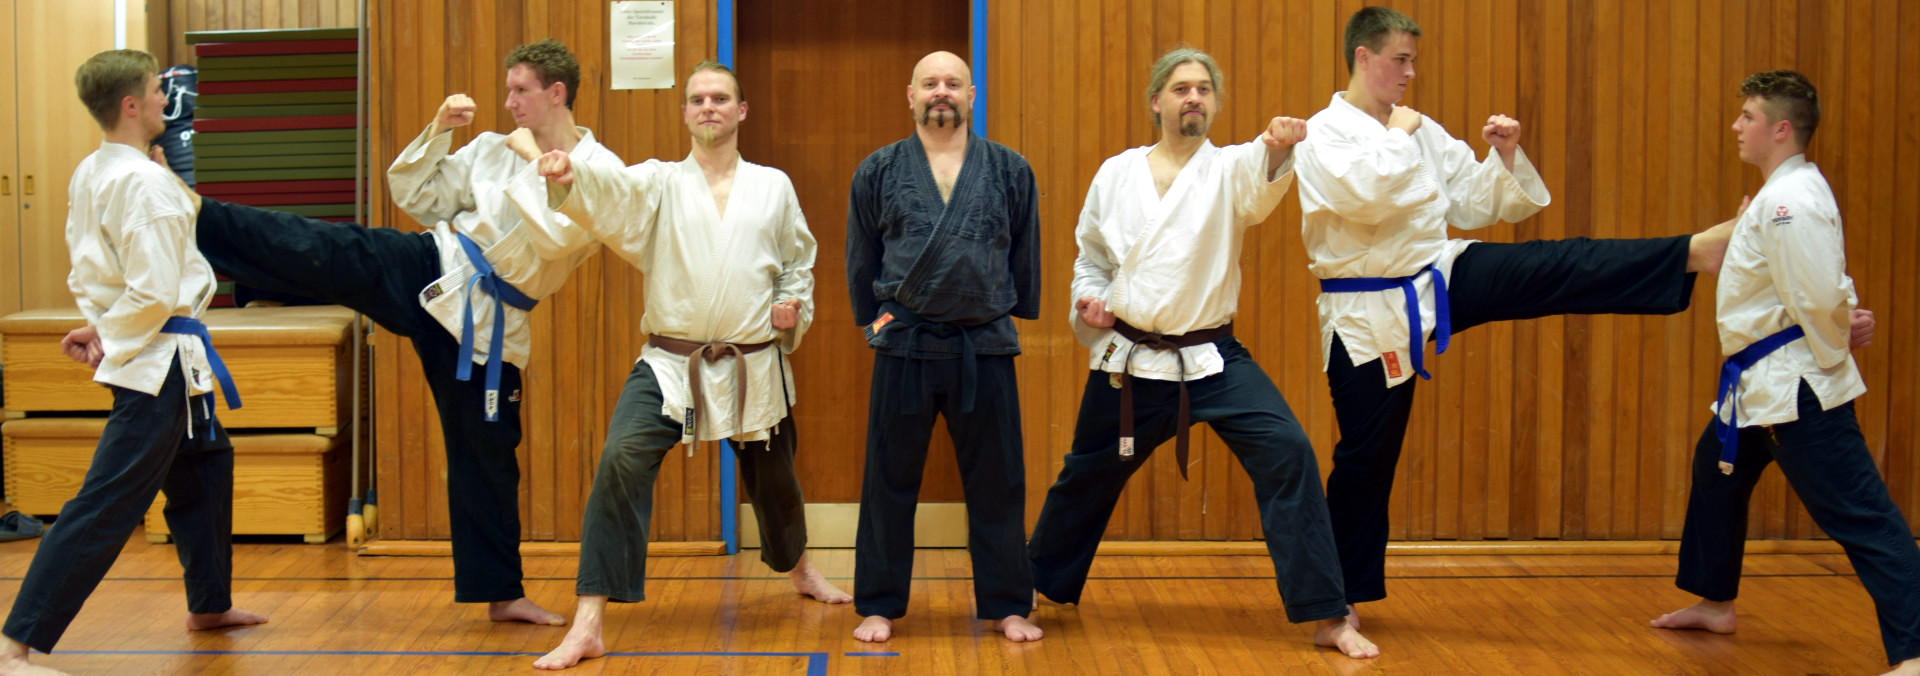 Shaolin-Kempo Gruppenfoto